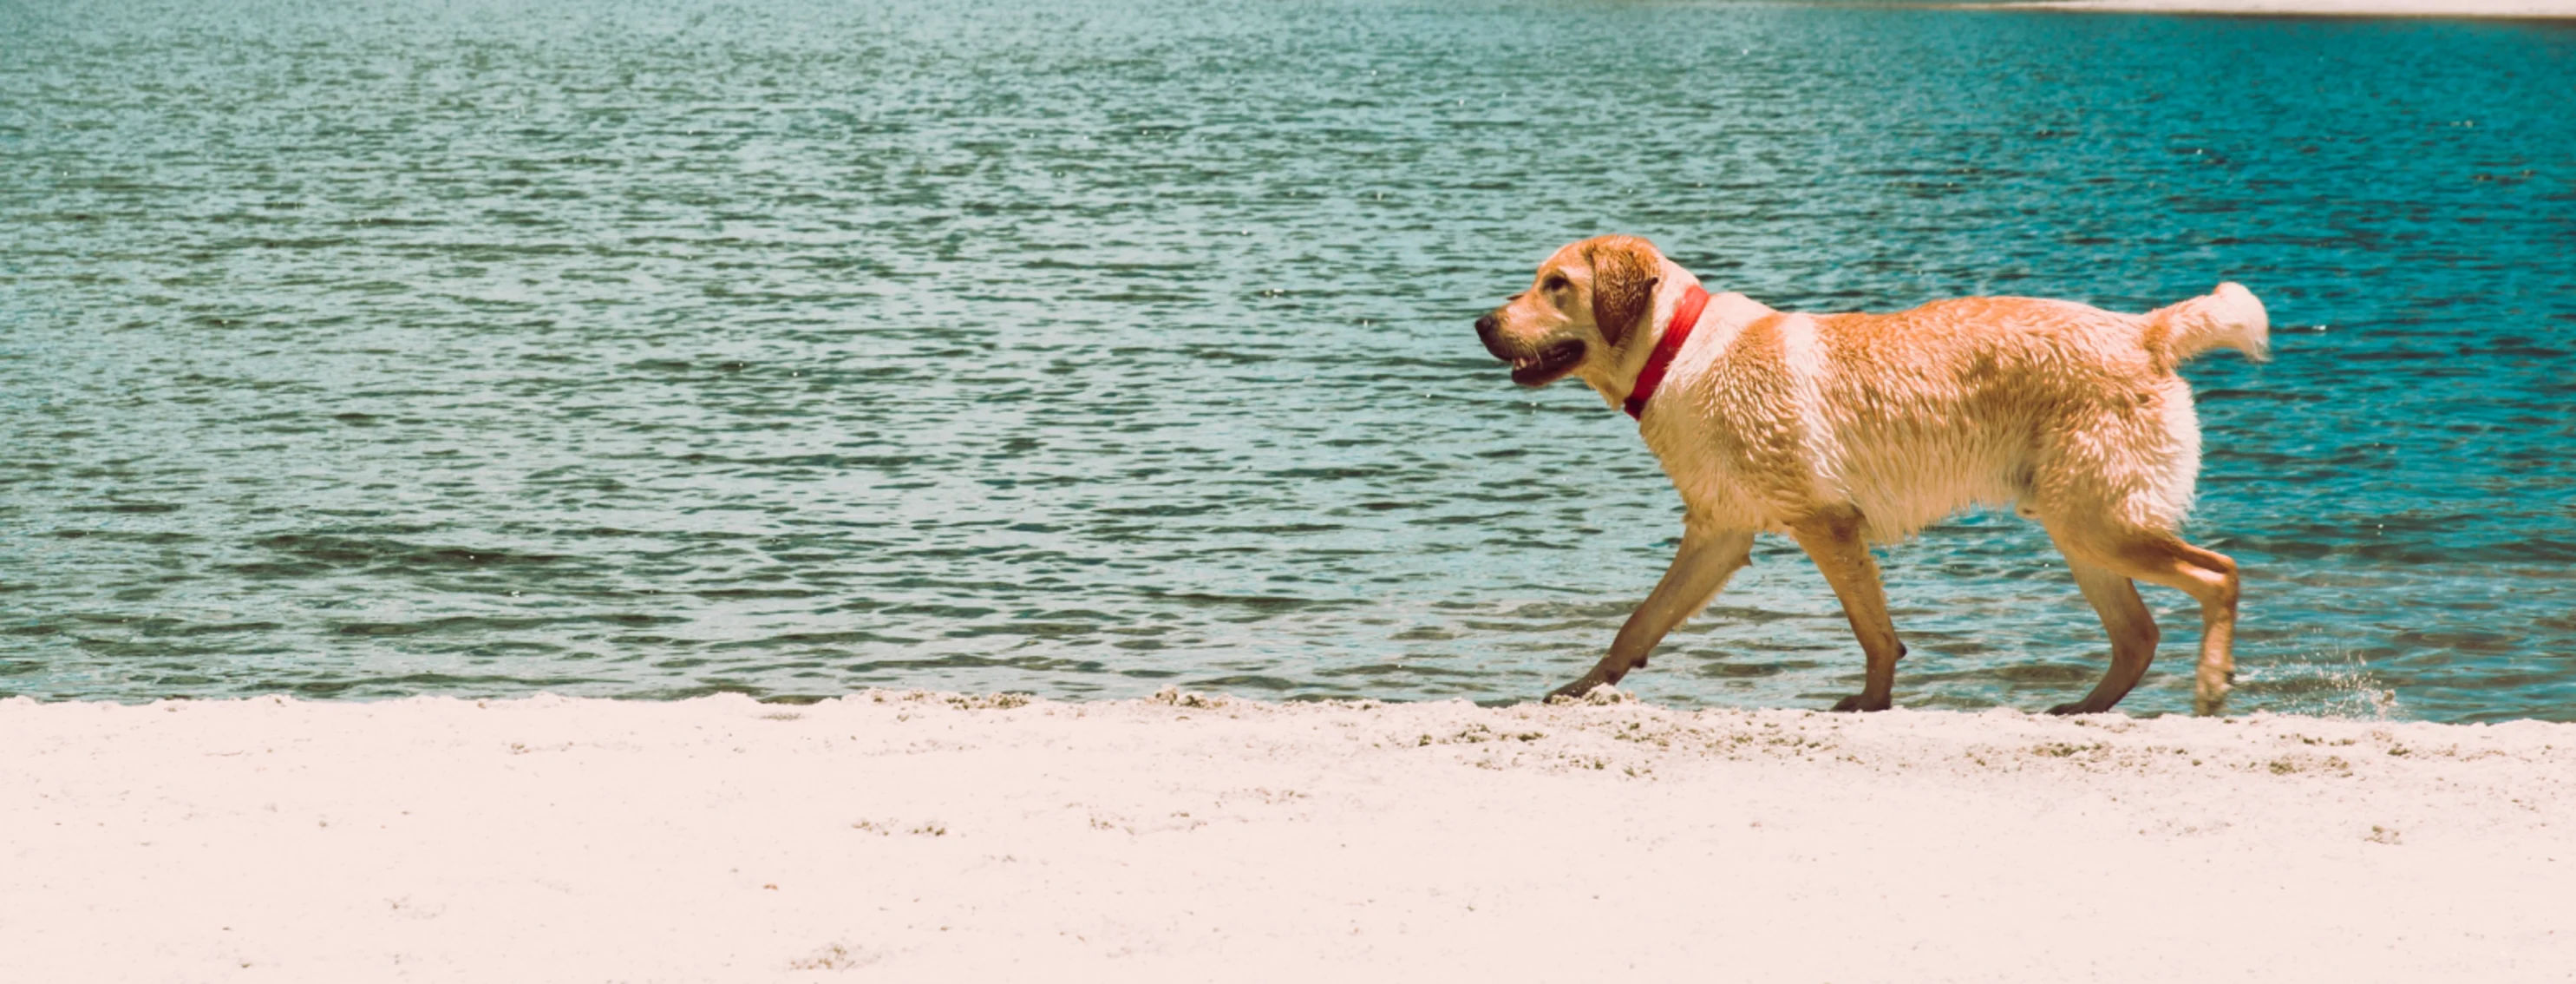 Dog on Beach Walking